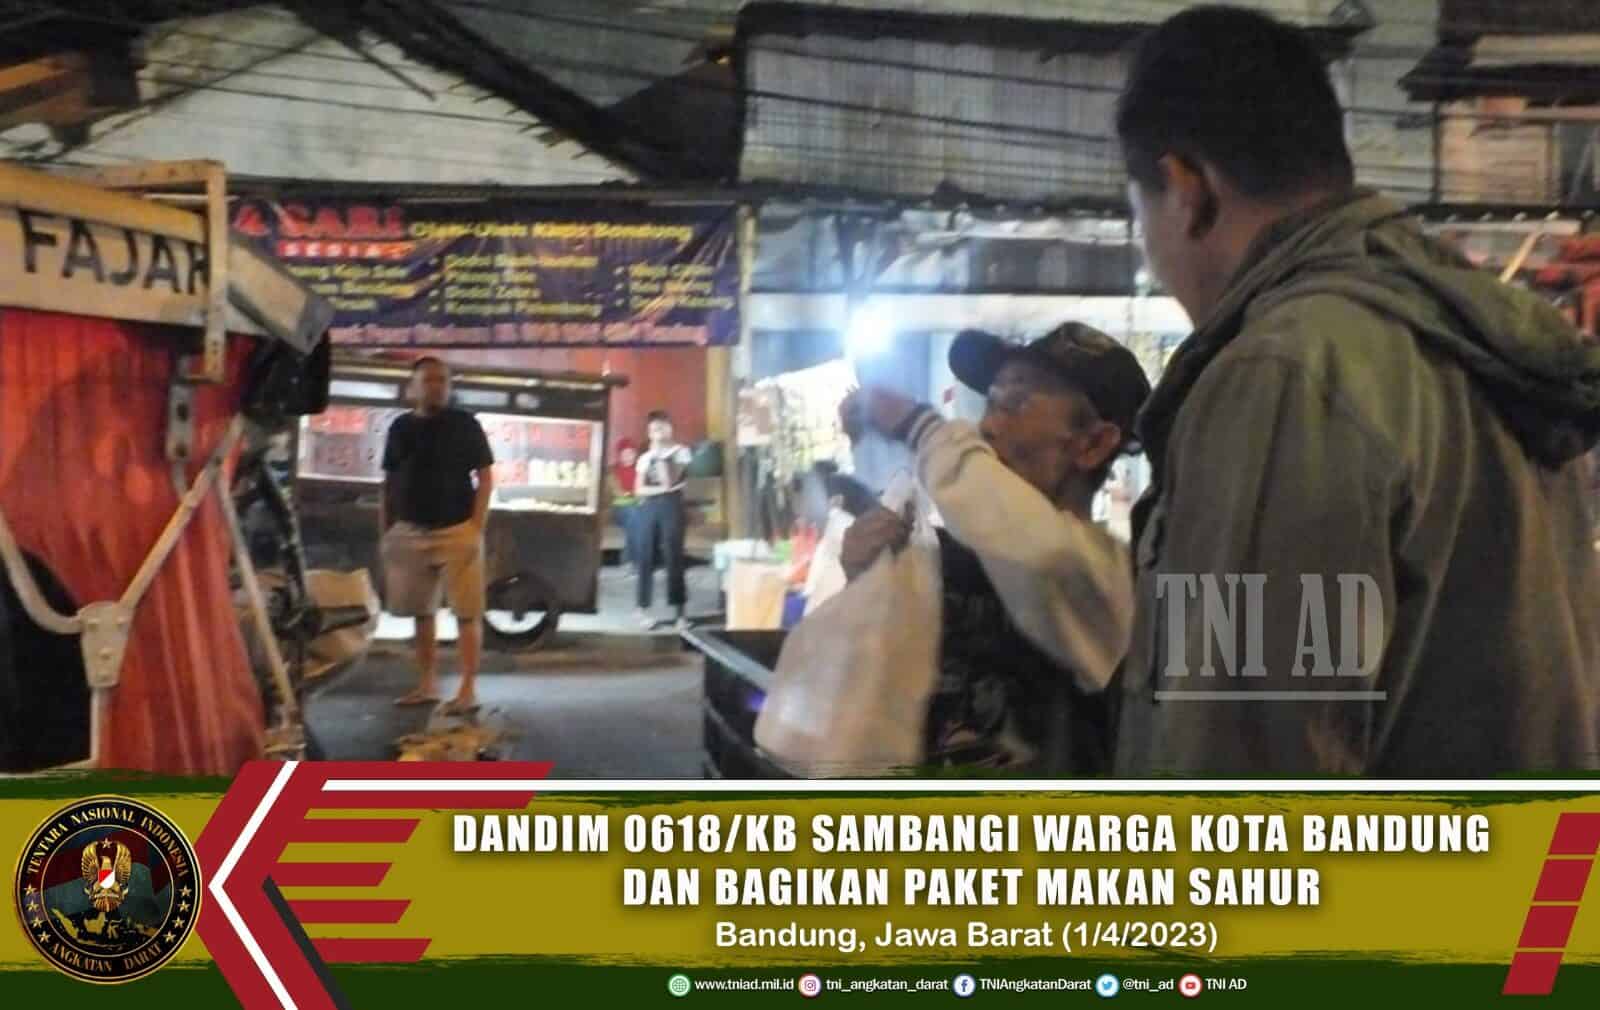 Dandim 0618/KB Sambangi Warga Kota Bandung dan Bagikan Paket Makan Sahur